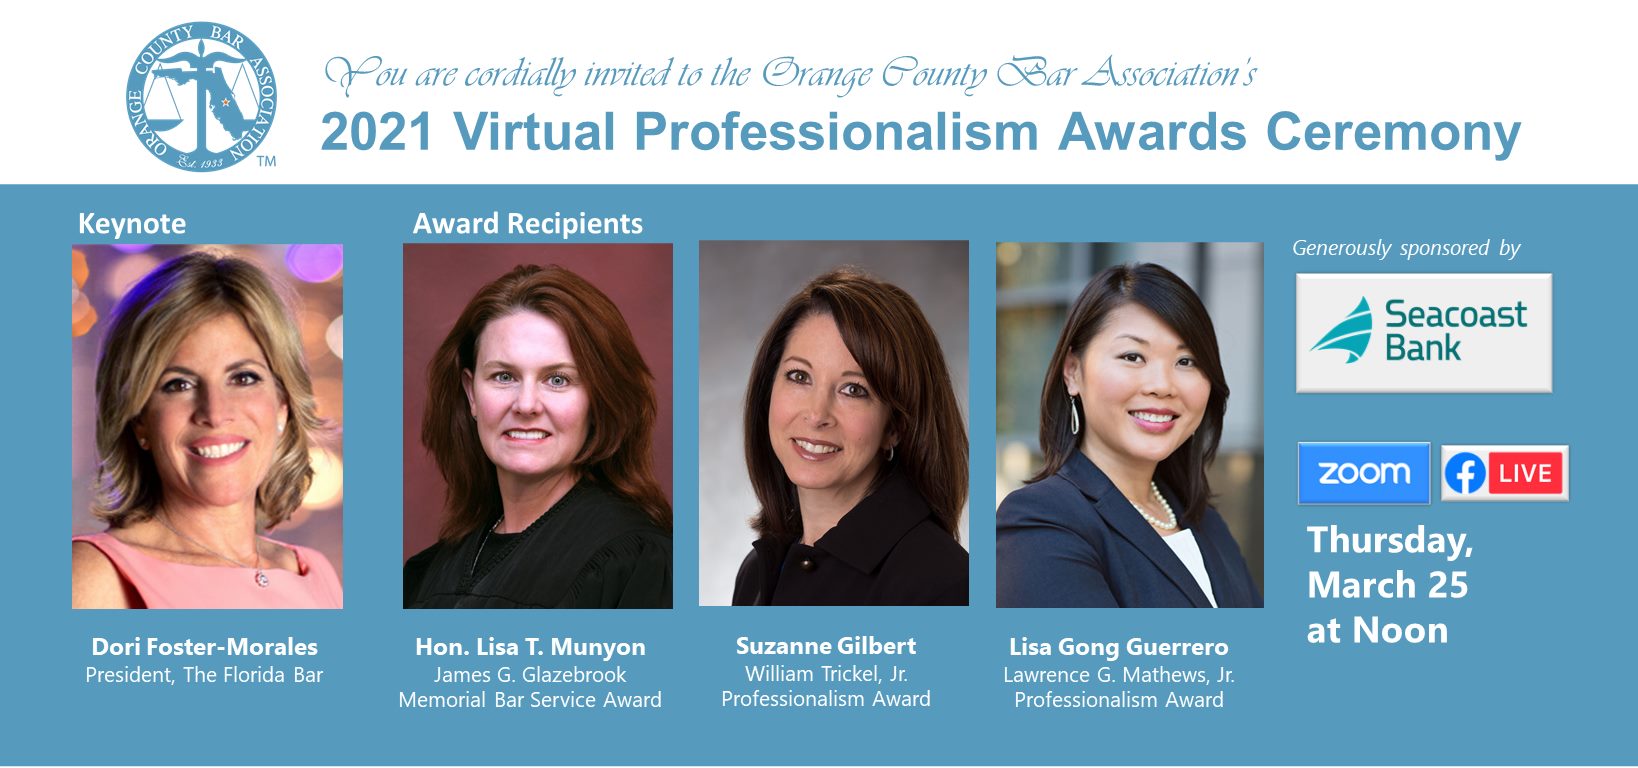 2021 Virtual Professionalism Awards Ceremony